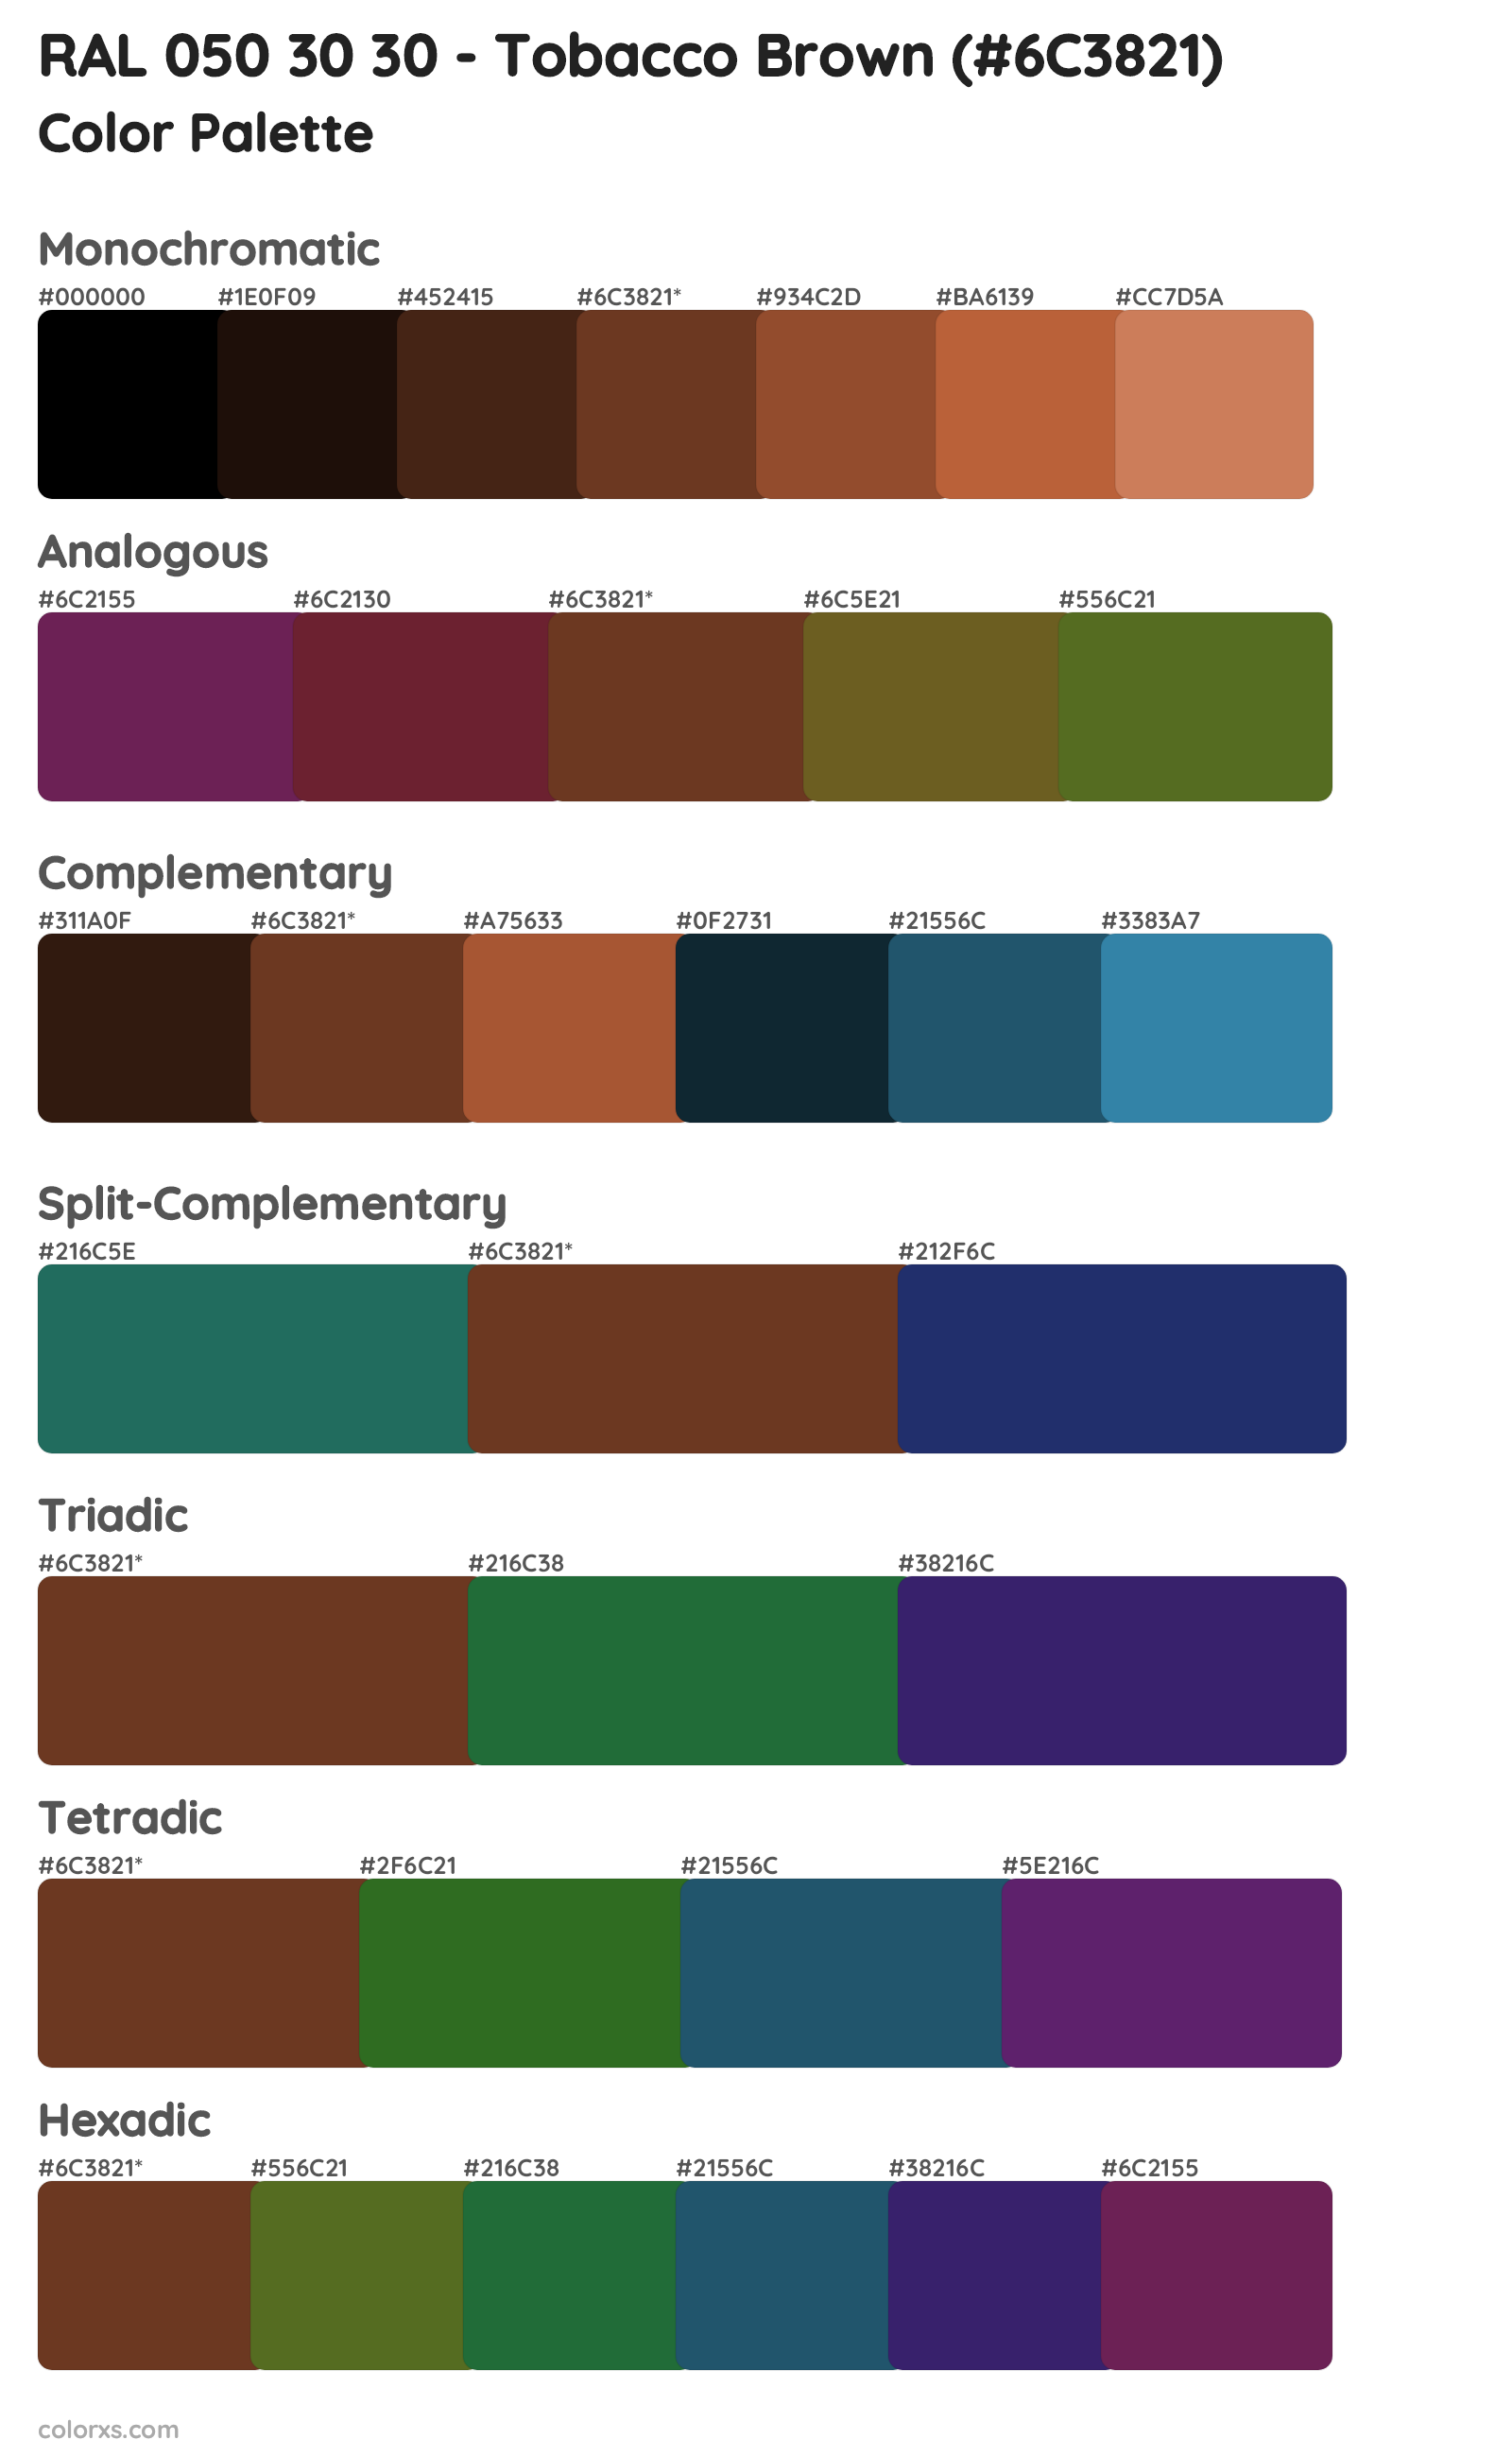 RAL 050 30 30 - Tobacco Brown Color Scheme Palettes